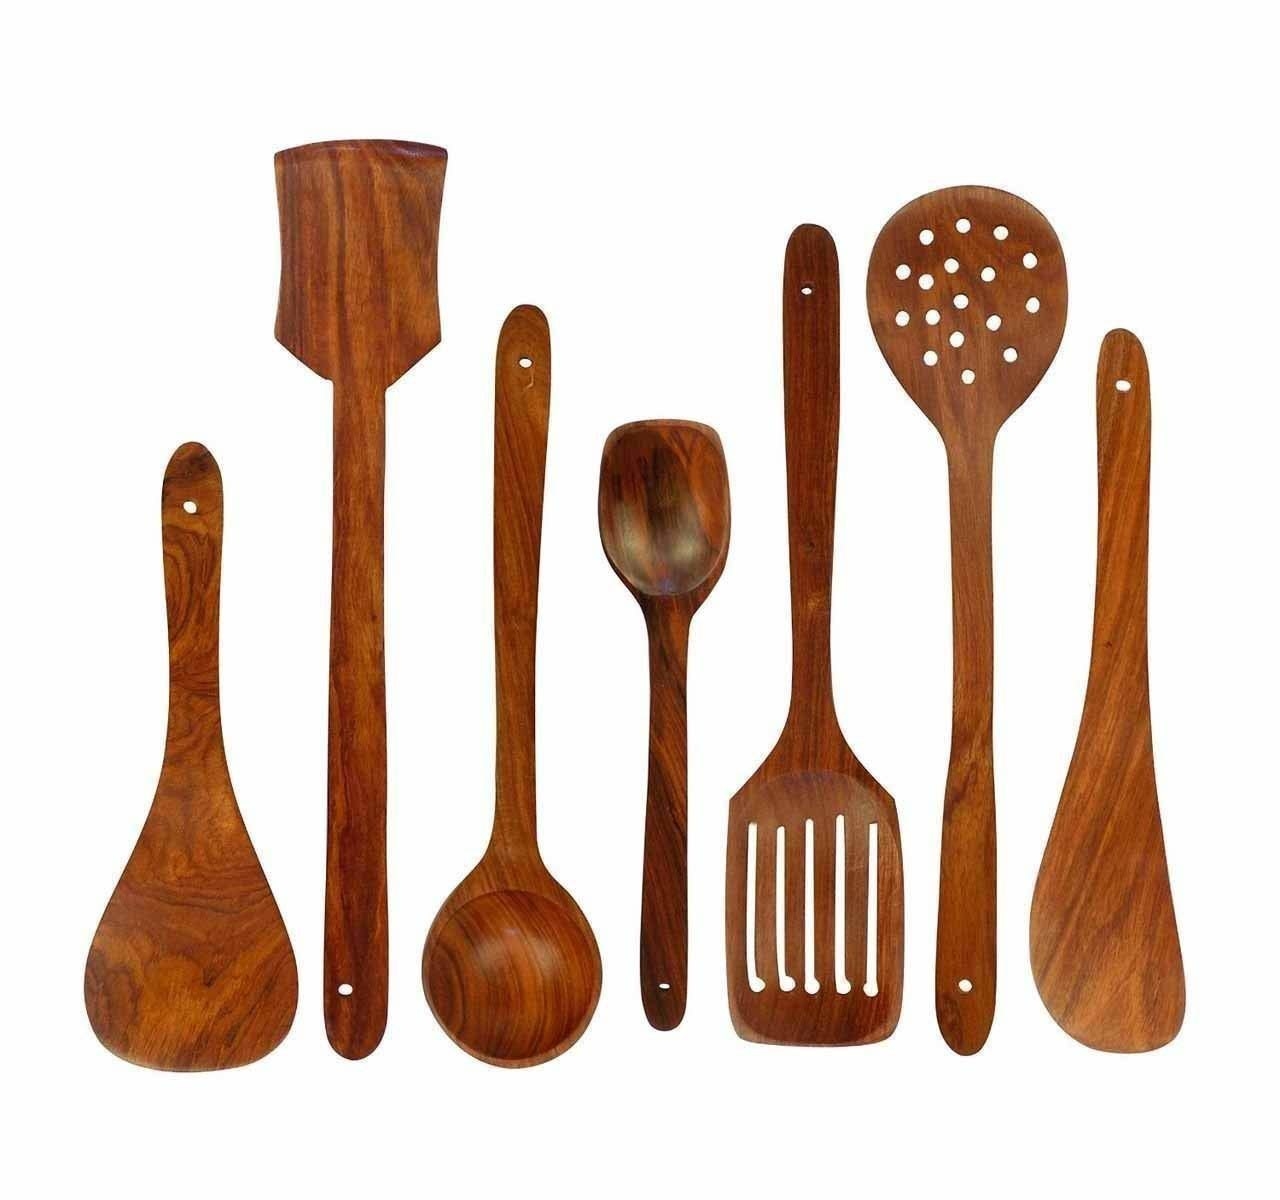 A set of different wooden utensils